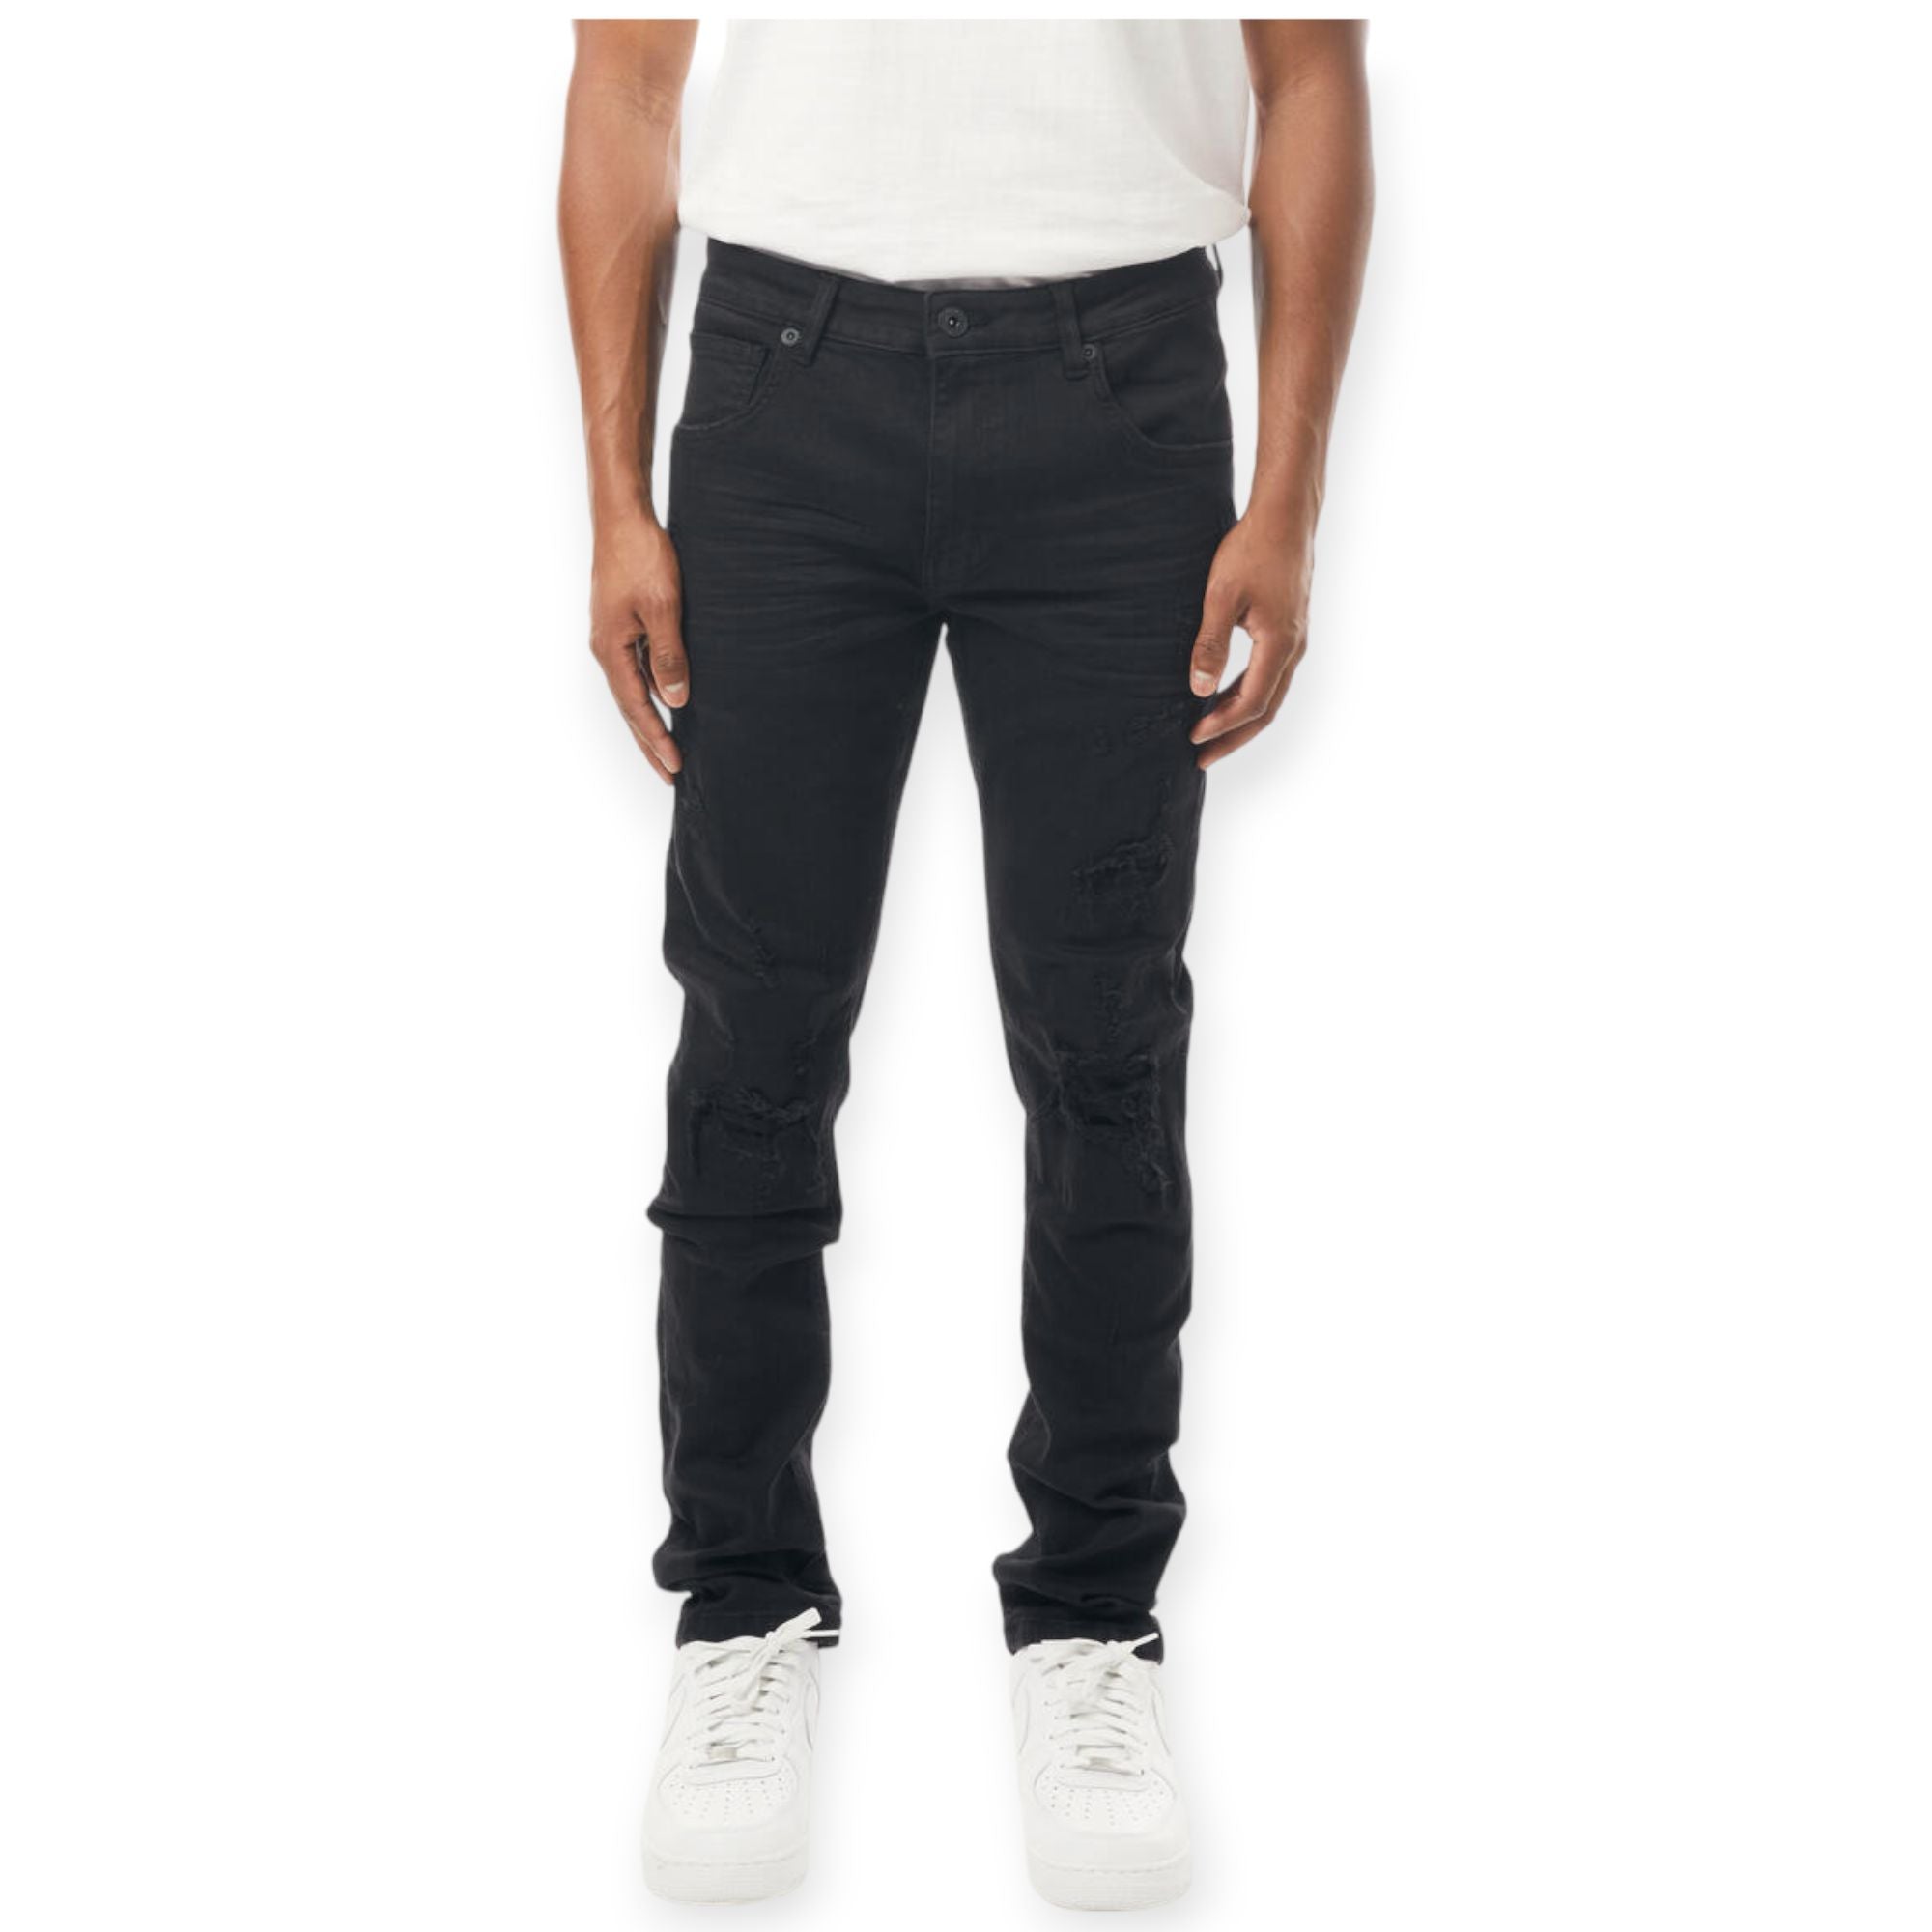 M. Society Men Skinny Fit Denim Jeans(Black)-Jet Black-30W X 32L-Nexus Clothing